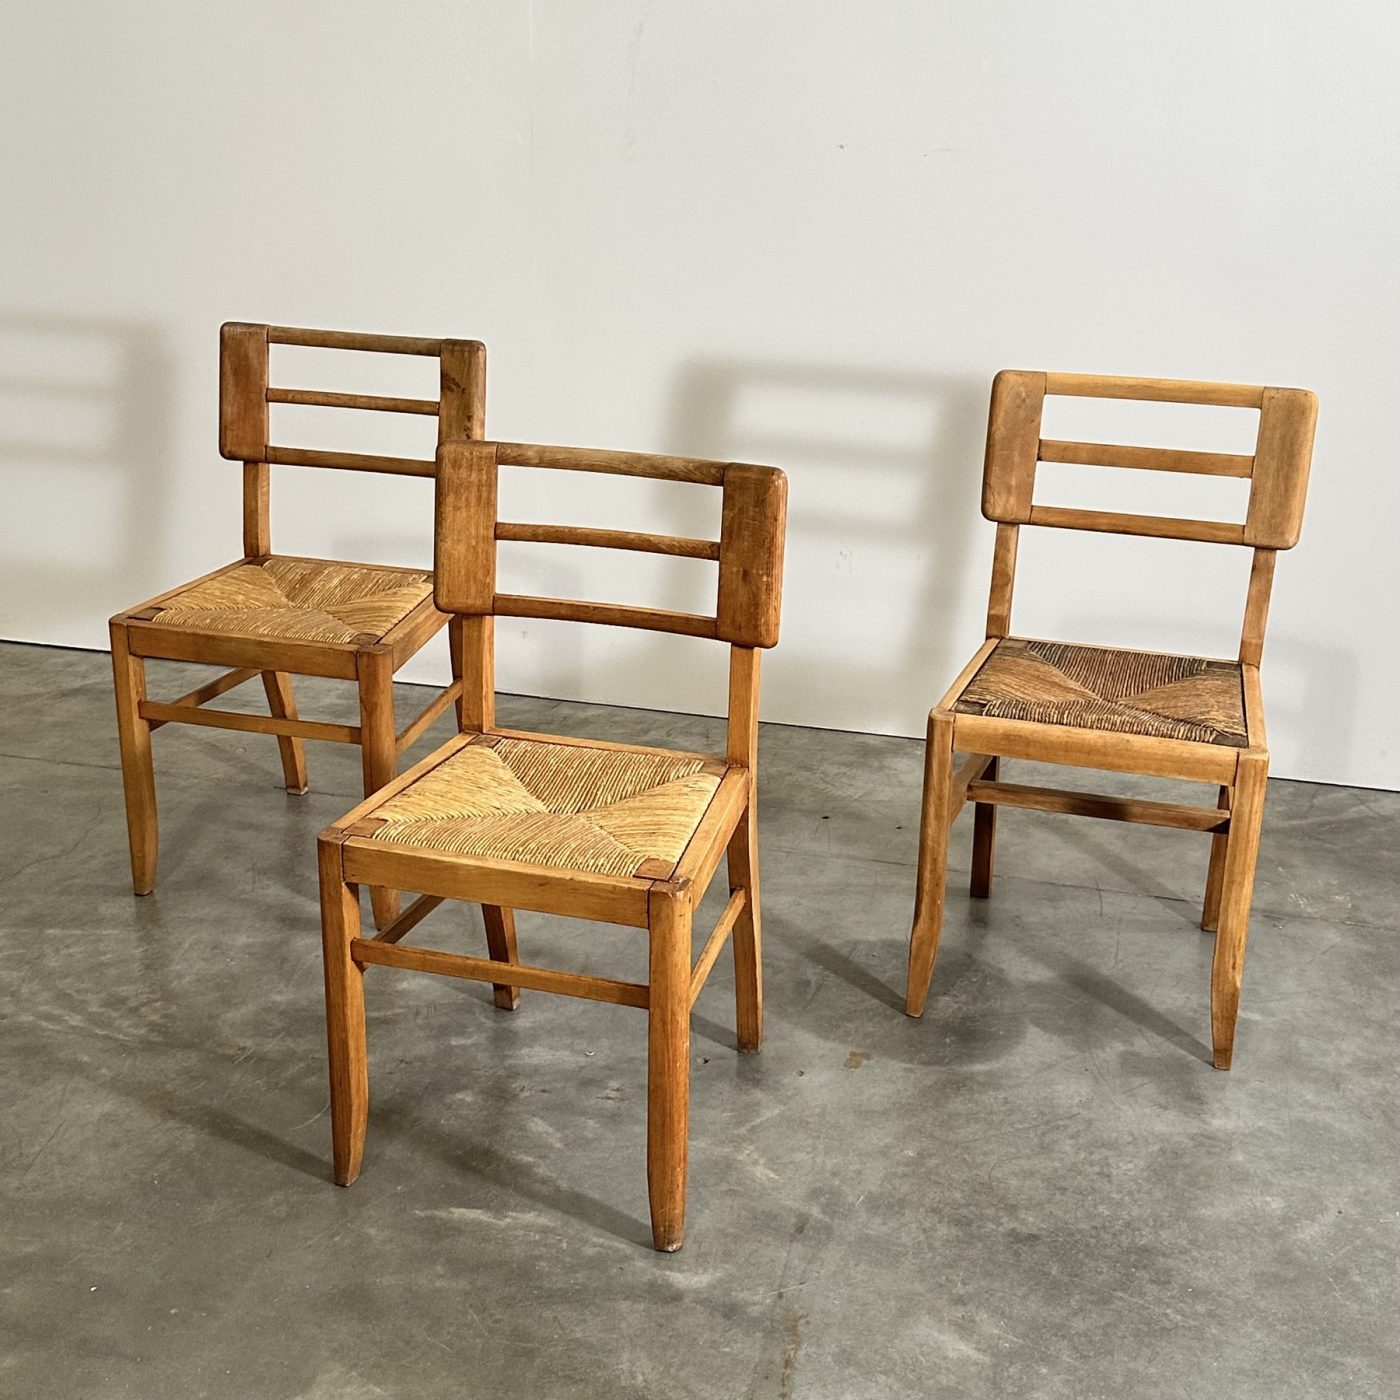 objet-vagabond-cruege-chairs0002